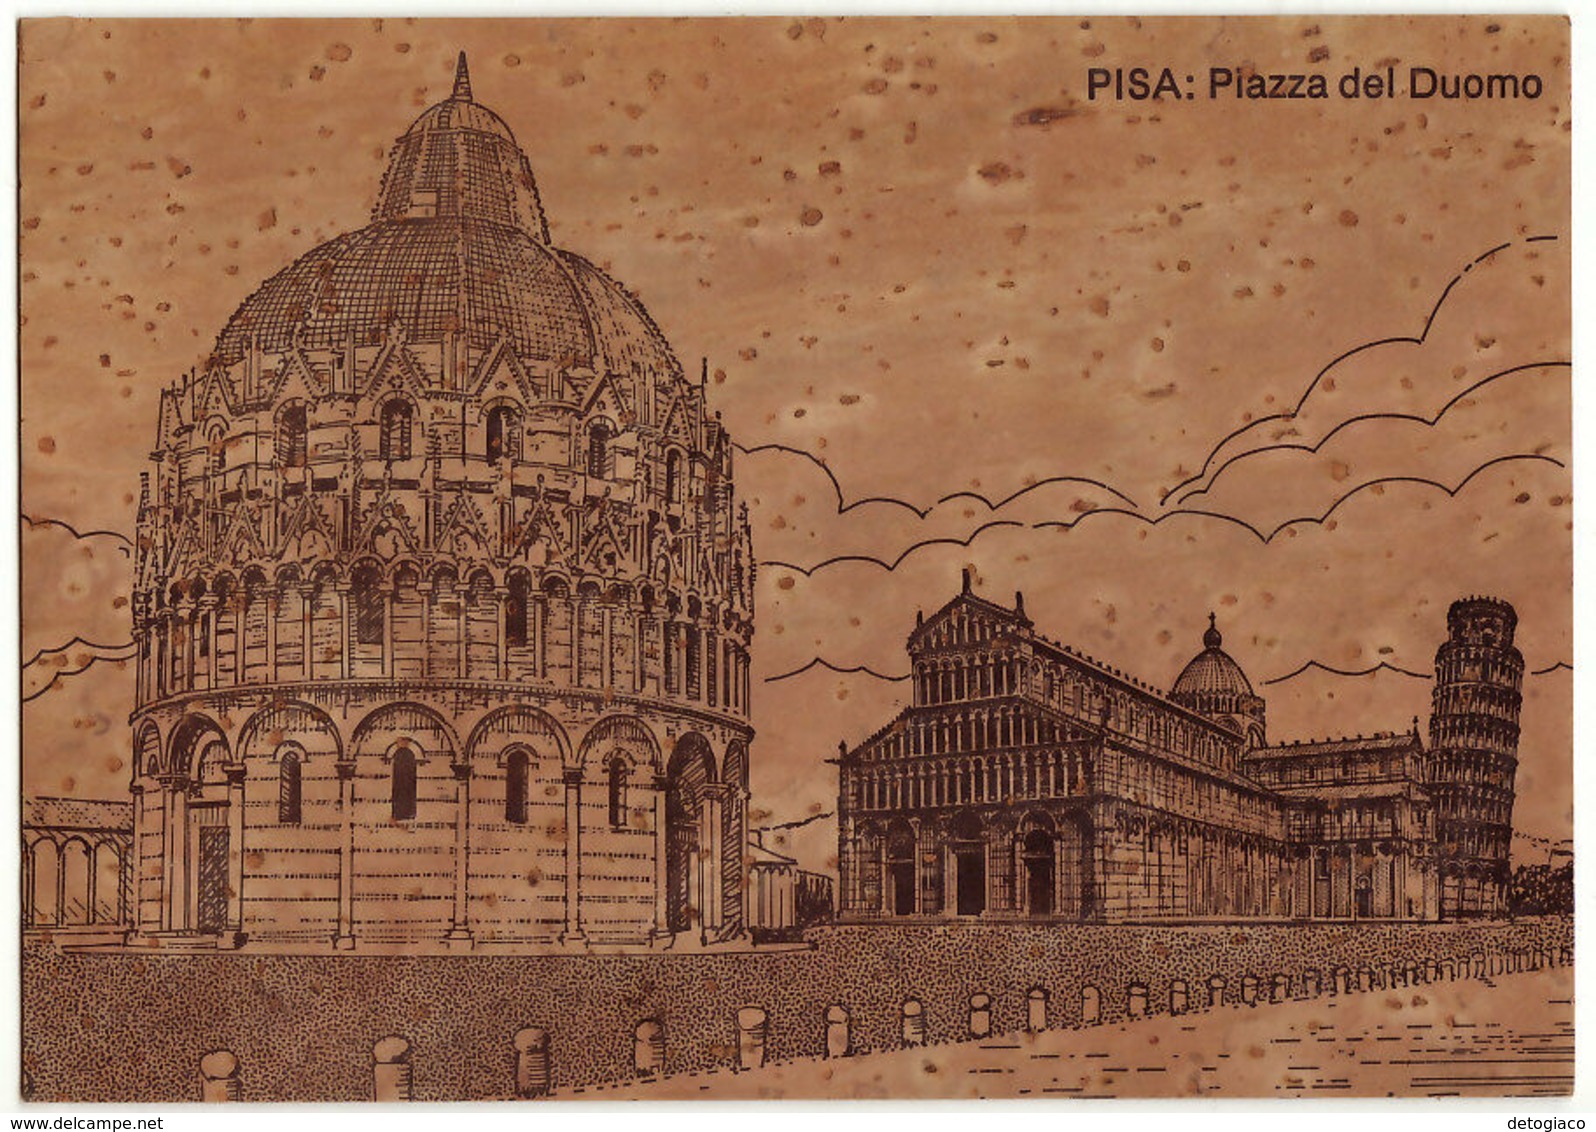 PISA - PIAZZA DEL DUOMO - CARTOLINA DI SUGHERO -14261- - Pisa